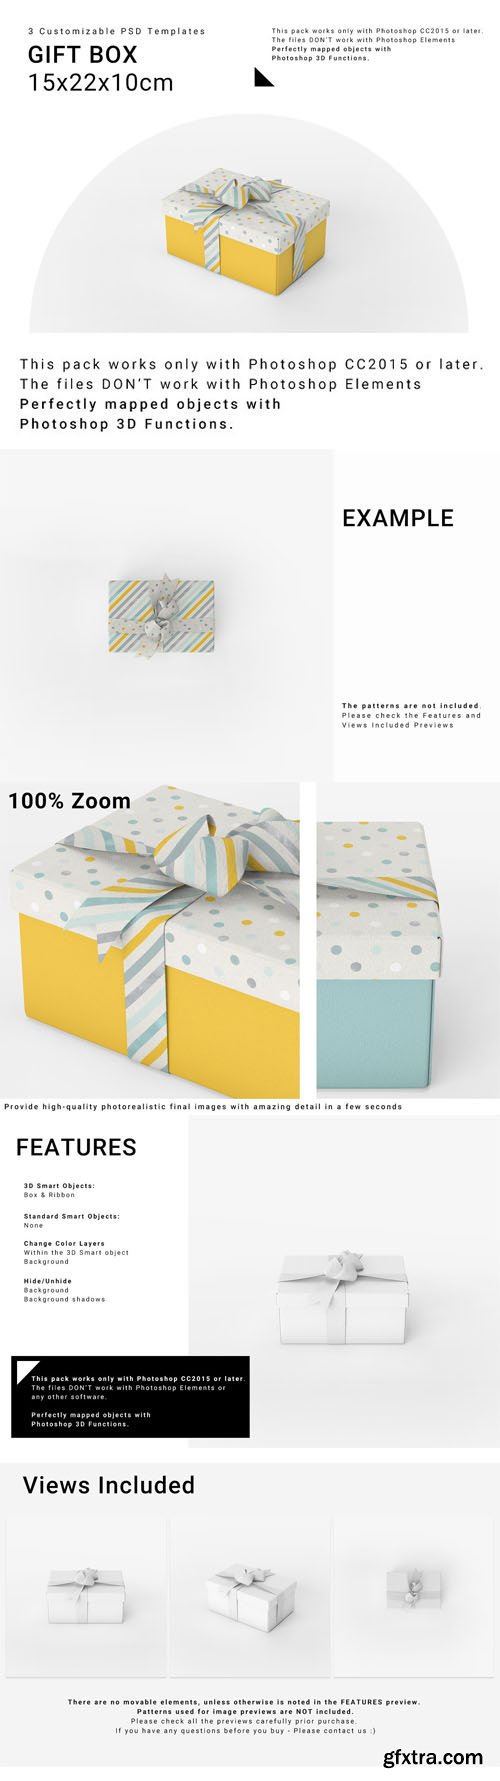 Gift Box Mockup - 3 Customizable PSD Templates